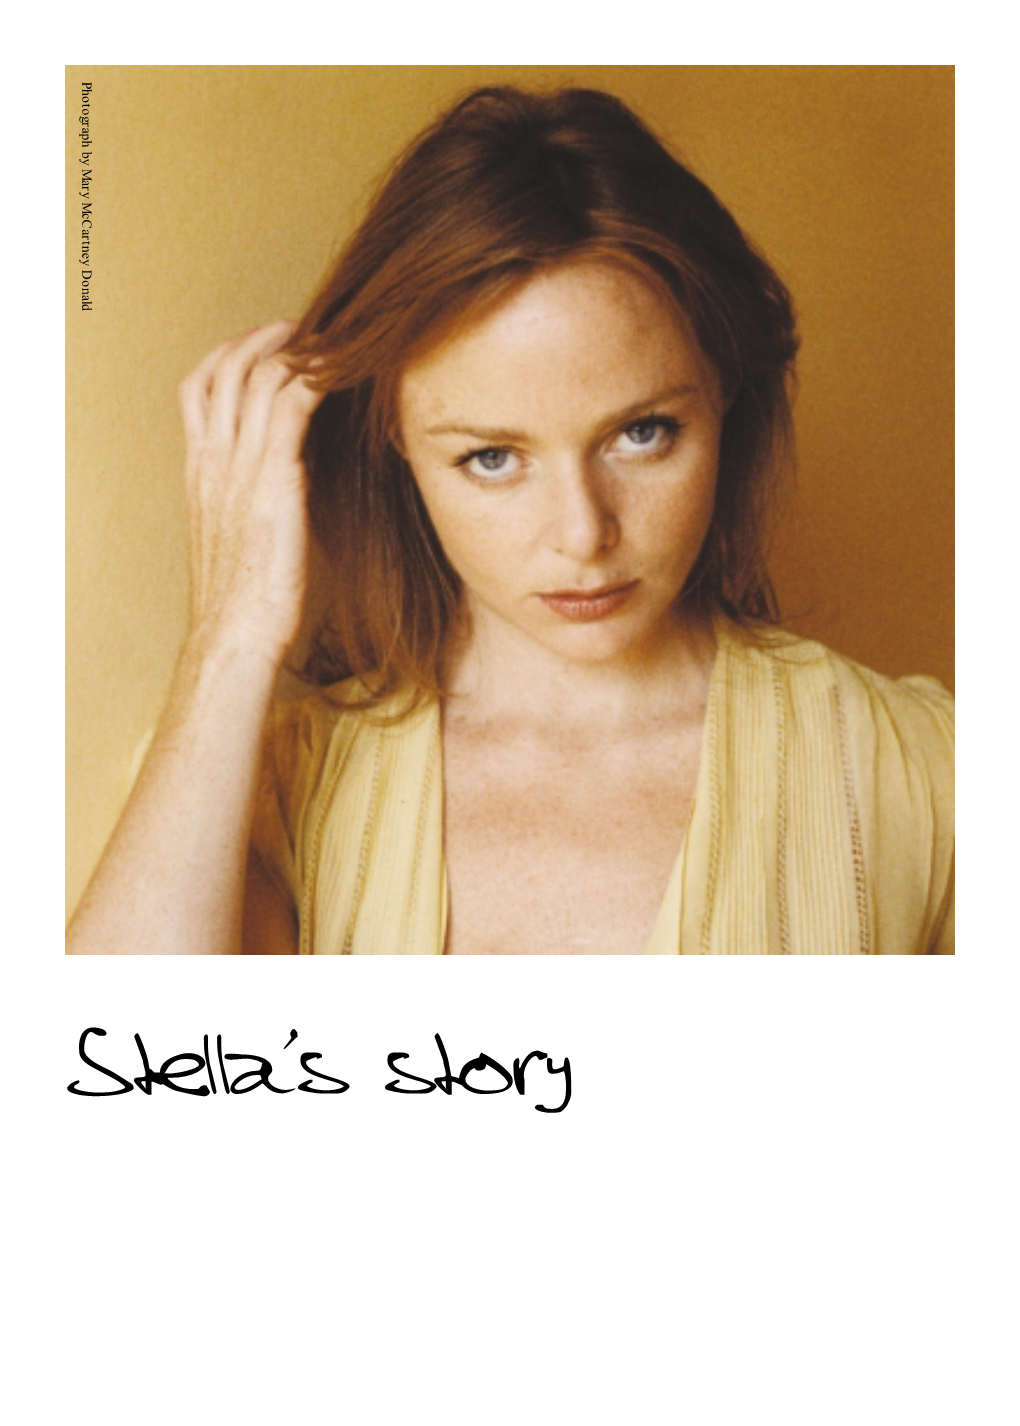 Imagine... Stella's Story